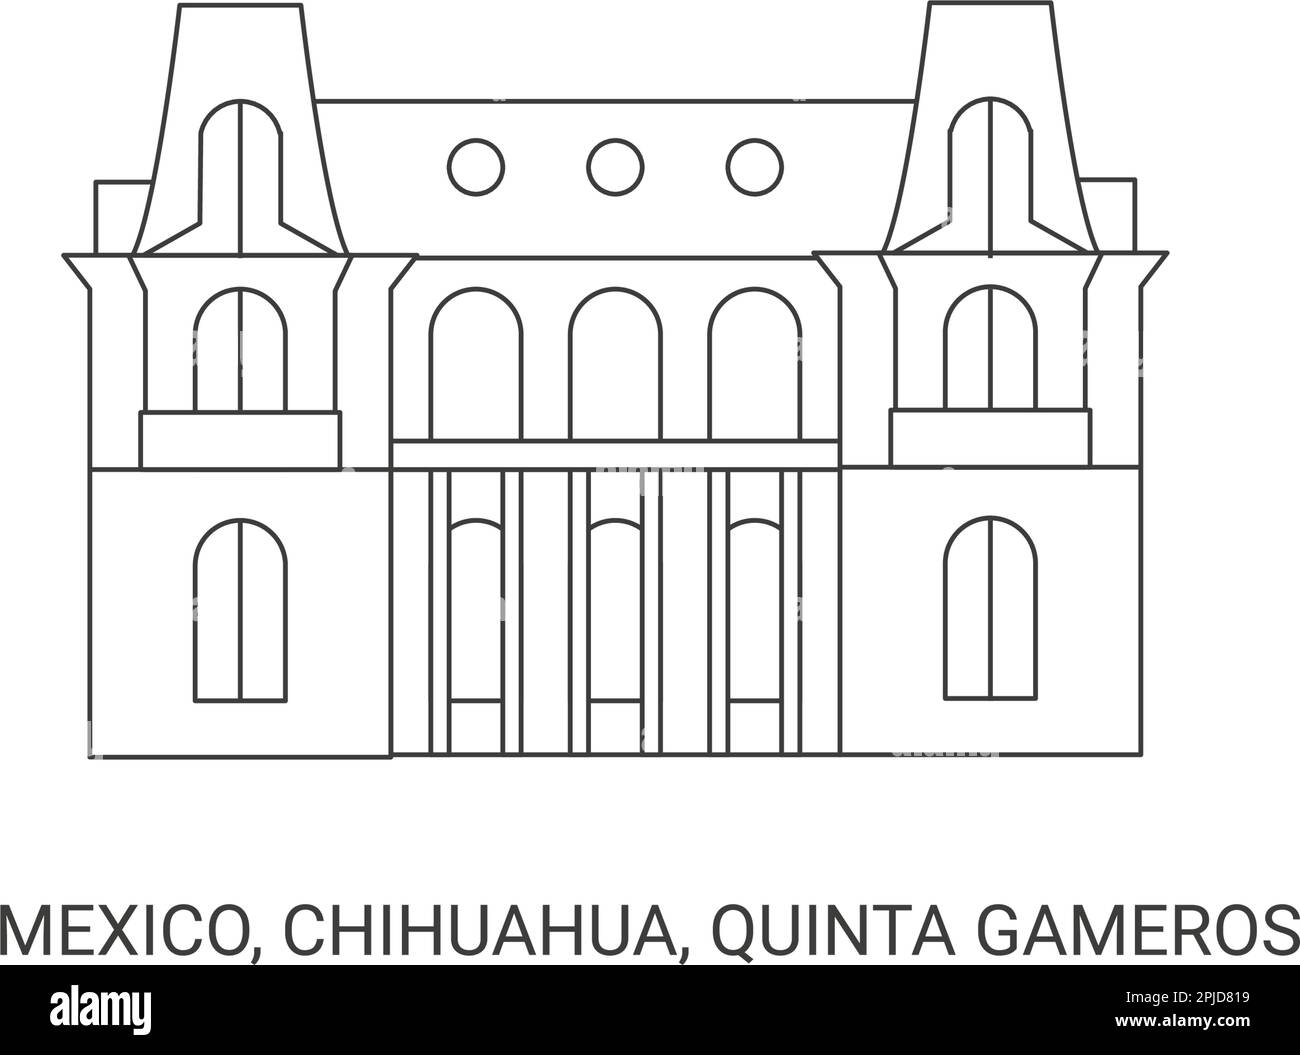 Mexico, Chihuahua, Quinta Gameros, travel landmark vector illustration Stock Vector